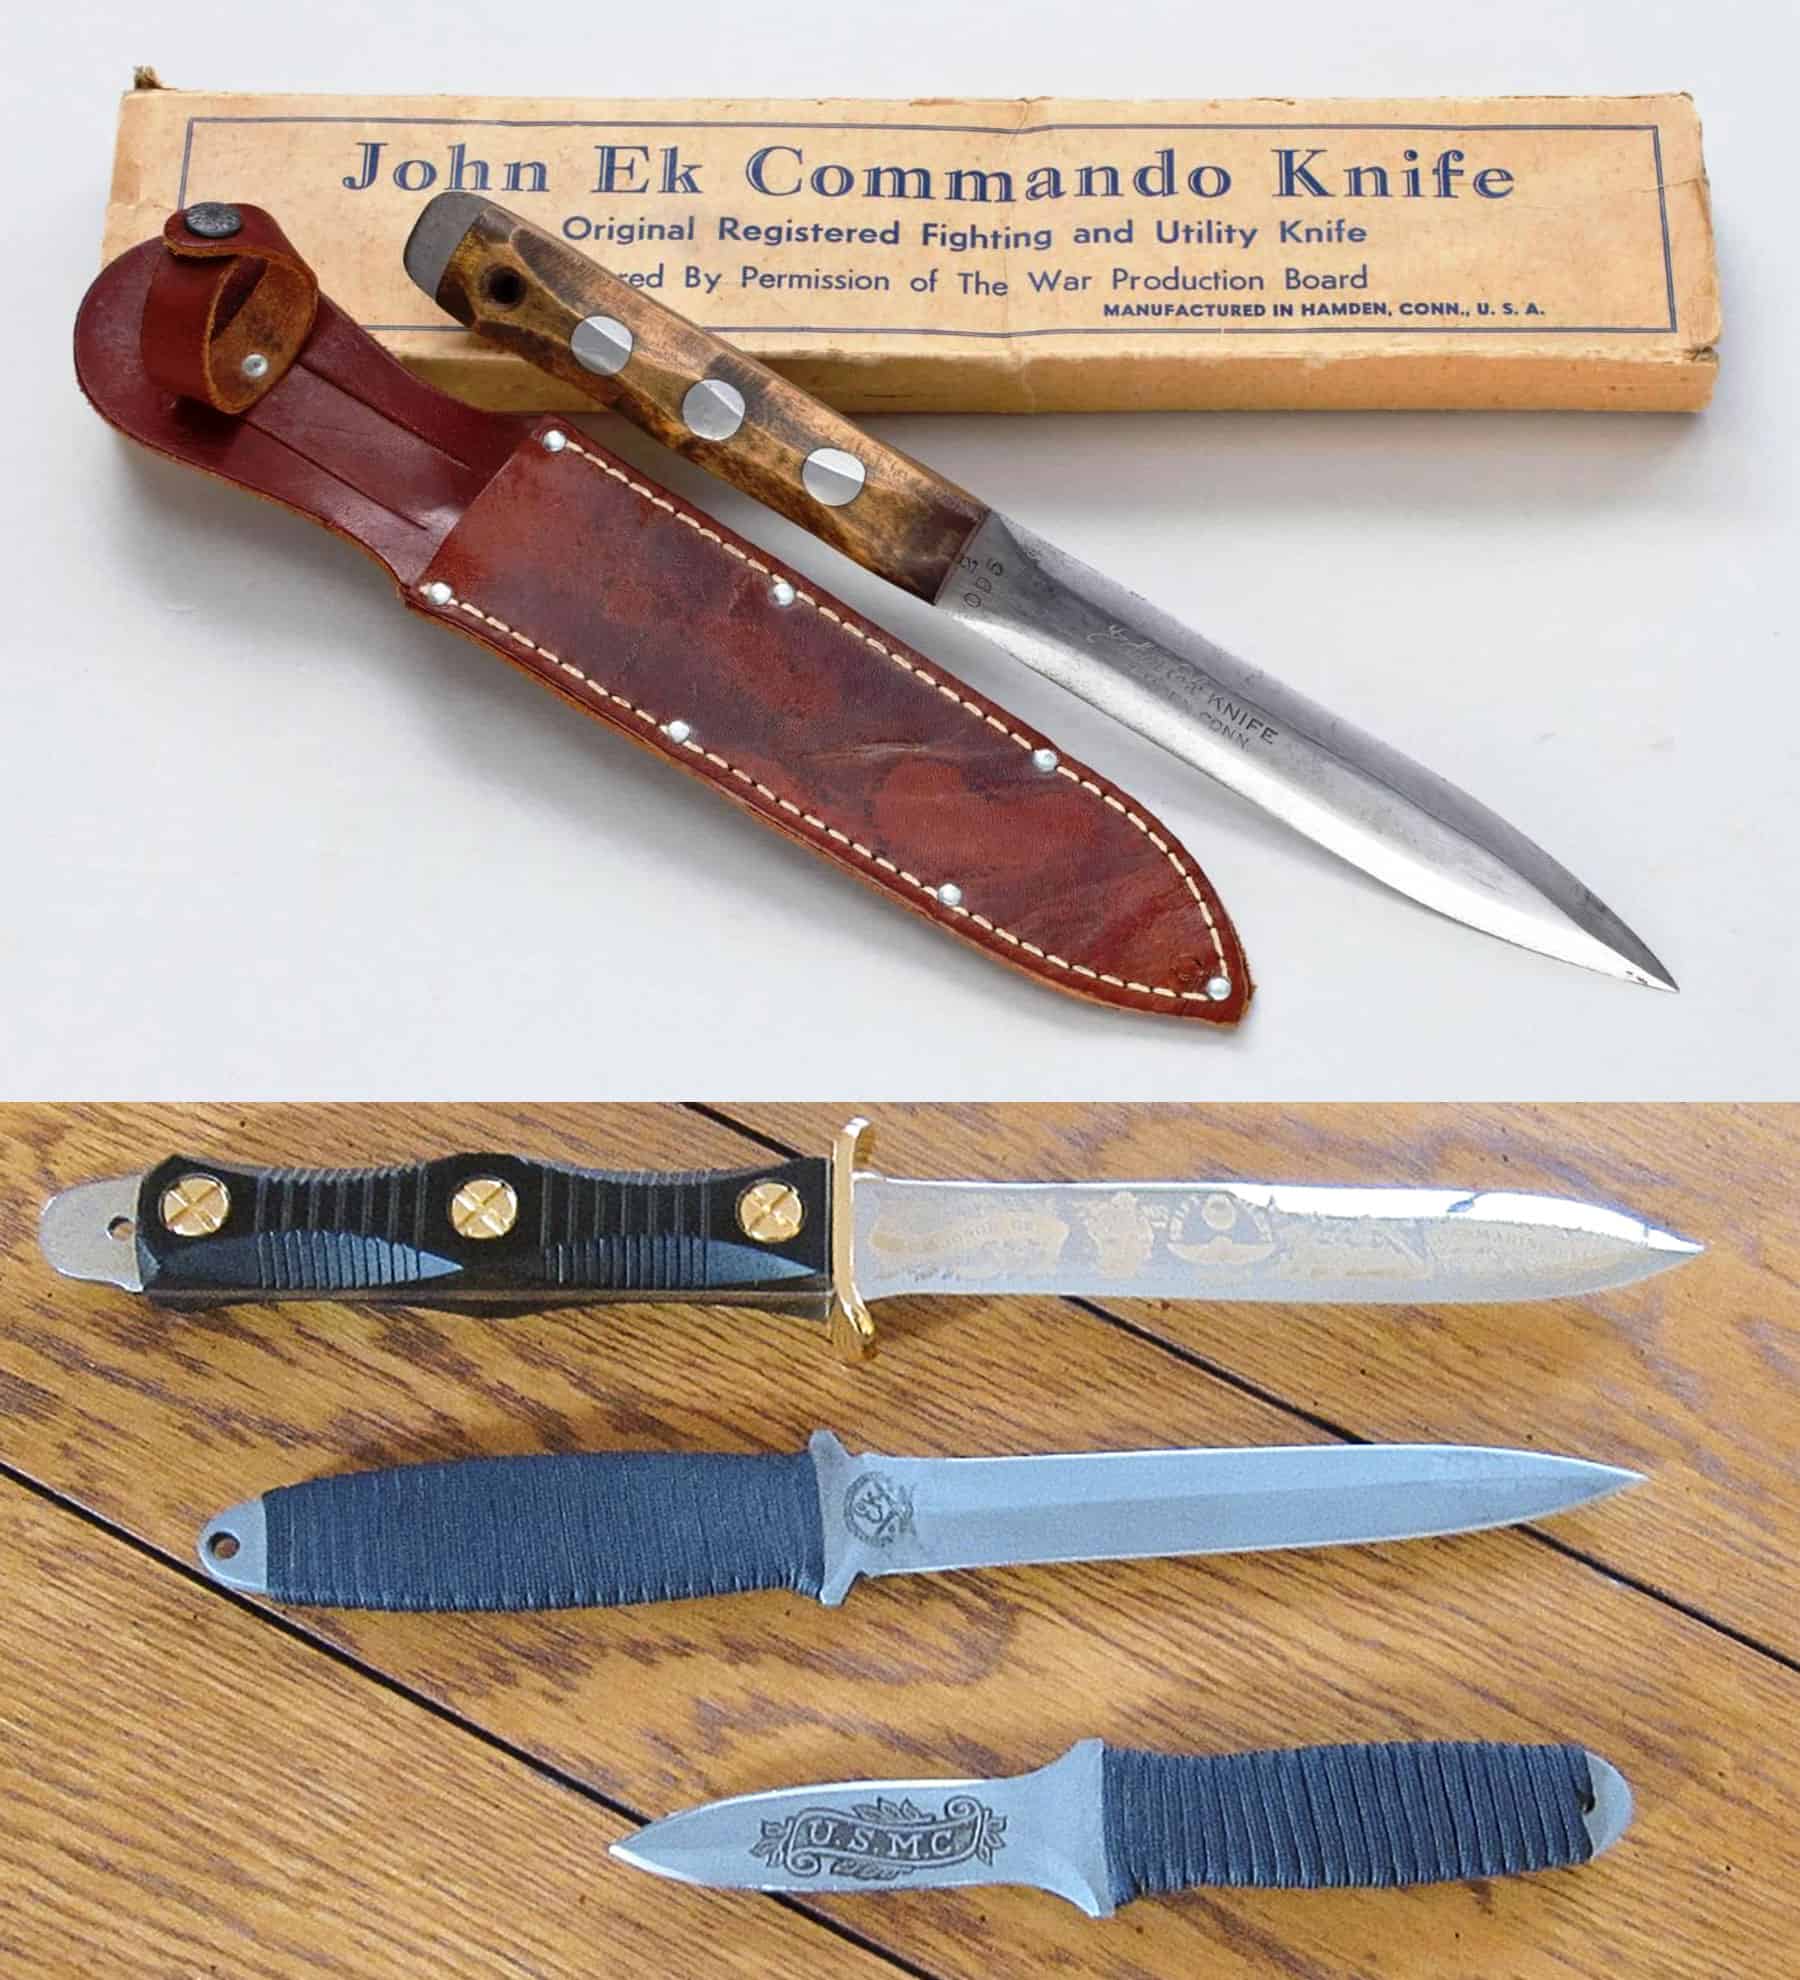 The original Ek Commando knives were more practical for outdoor tasks than previous tactical knives.